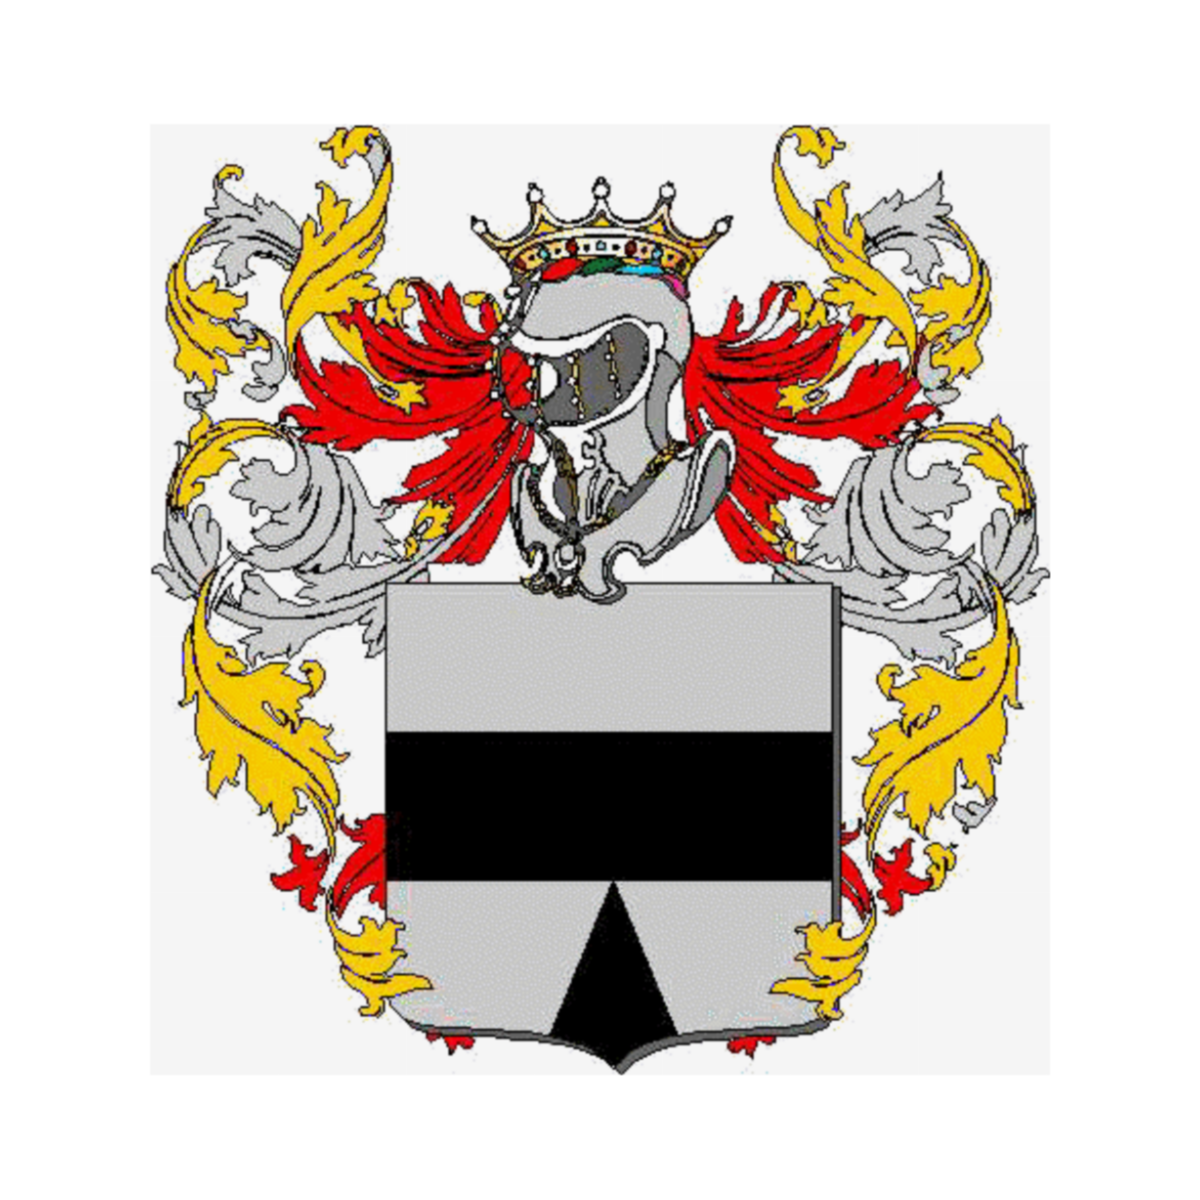 Wappen der Familie Oddi Baglioni